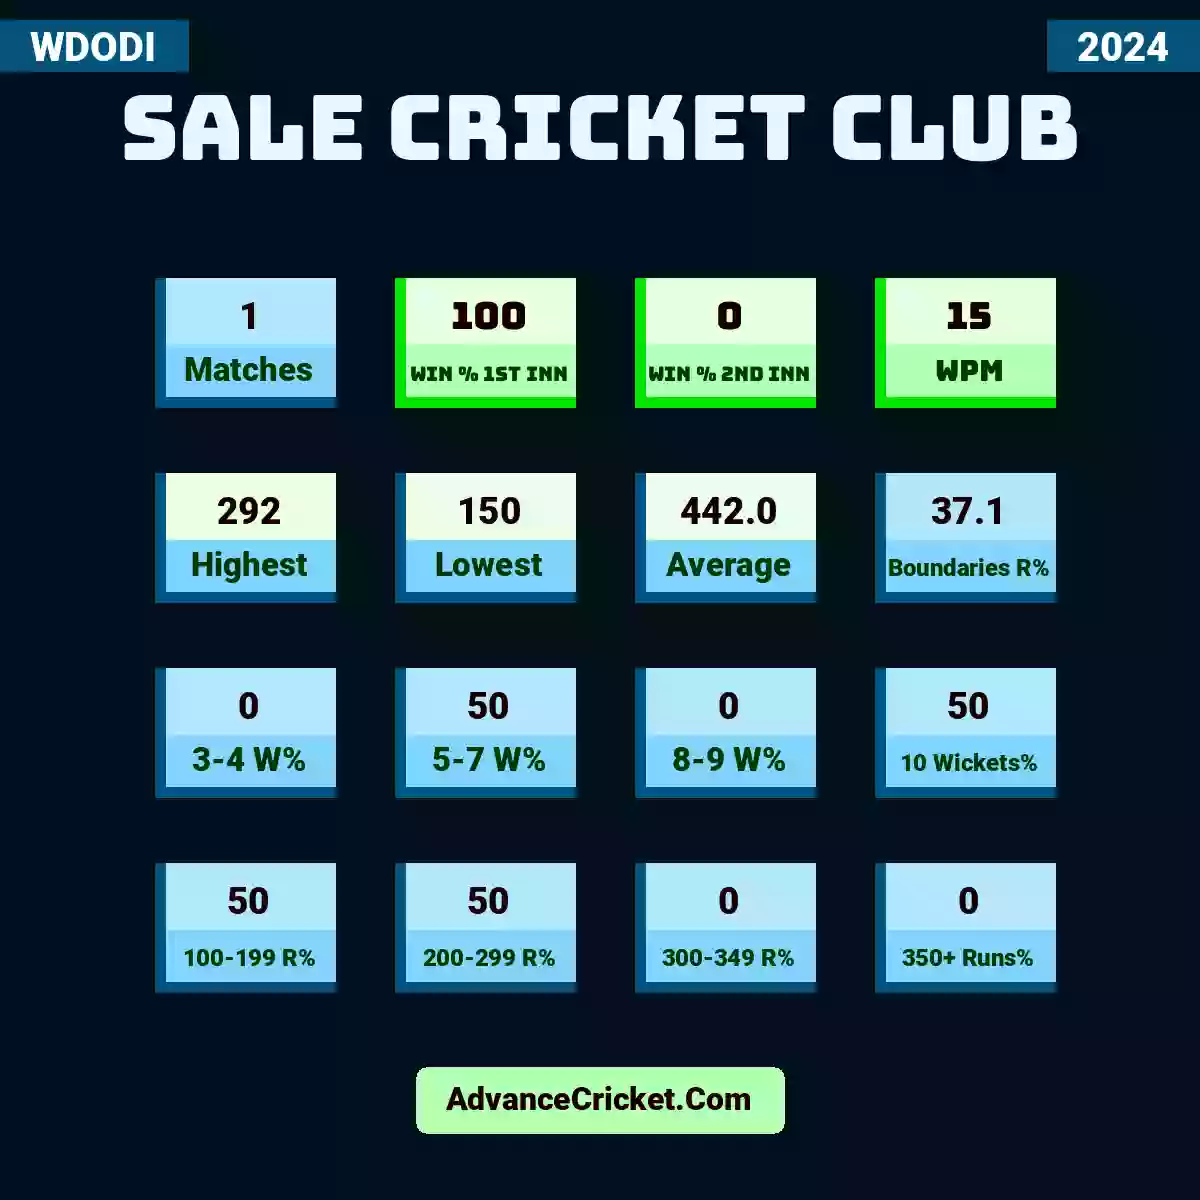 Image showing Sale Cricket Club WDODI 2024 with Matches: 1, Win % 1st Inn: 100, Win % 2nd Inn: 0, WPM: 15, Highest: 292, Lowest: 150, Average: 442.0, Boundaries R%: 37.1, 3-4 W%: 0, 5-7 W%: 50, 8-9 W%: 0, 10 Wickets%: 50, 100-199 R%: 50, 200-299 R%: 50, 300-349 R%: 0, 350+ Runs%: 0.